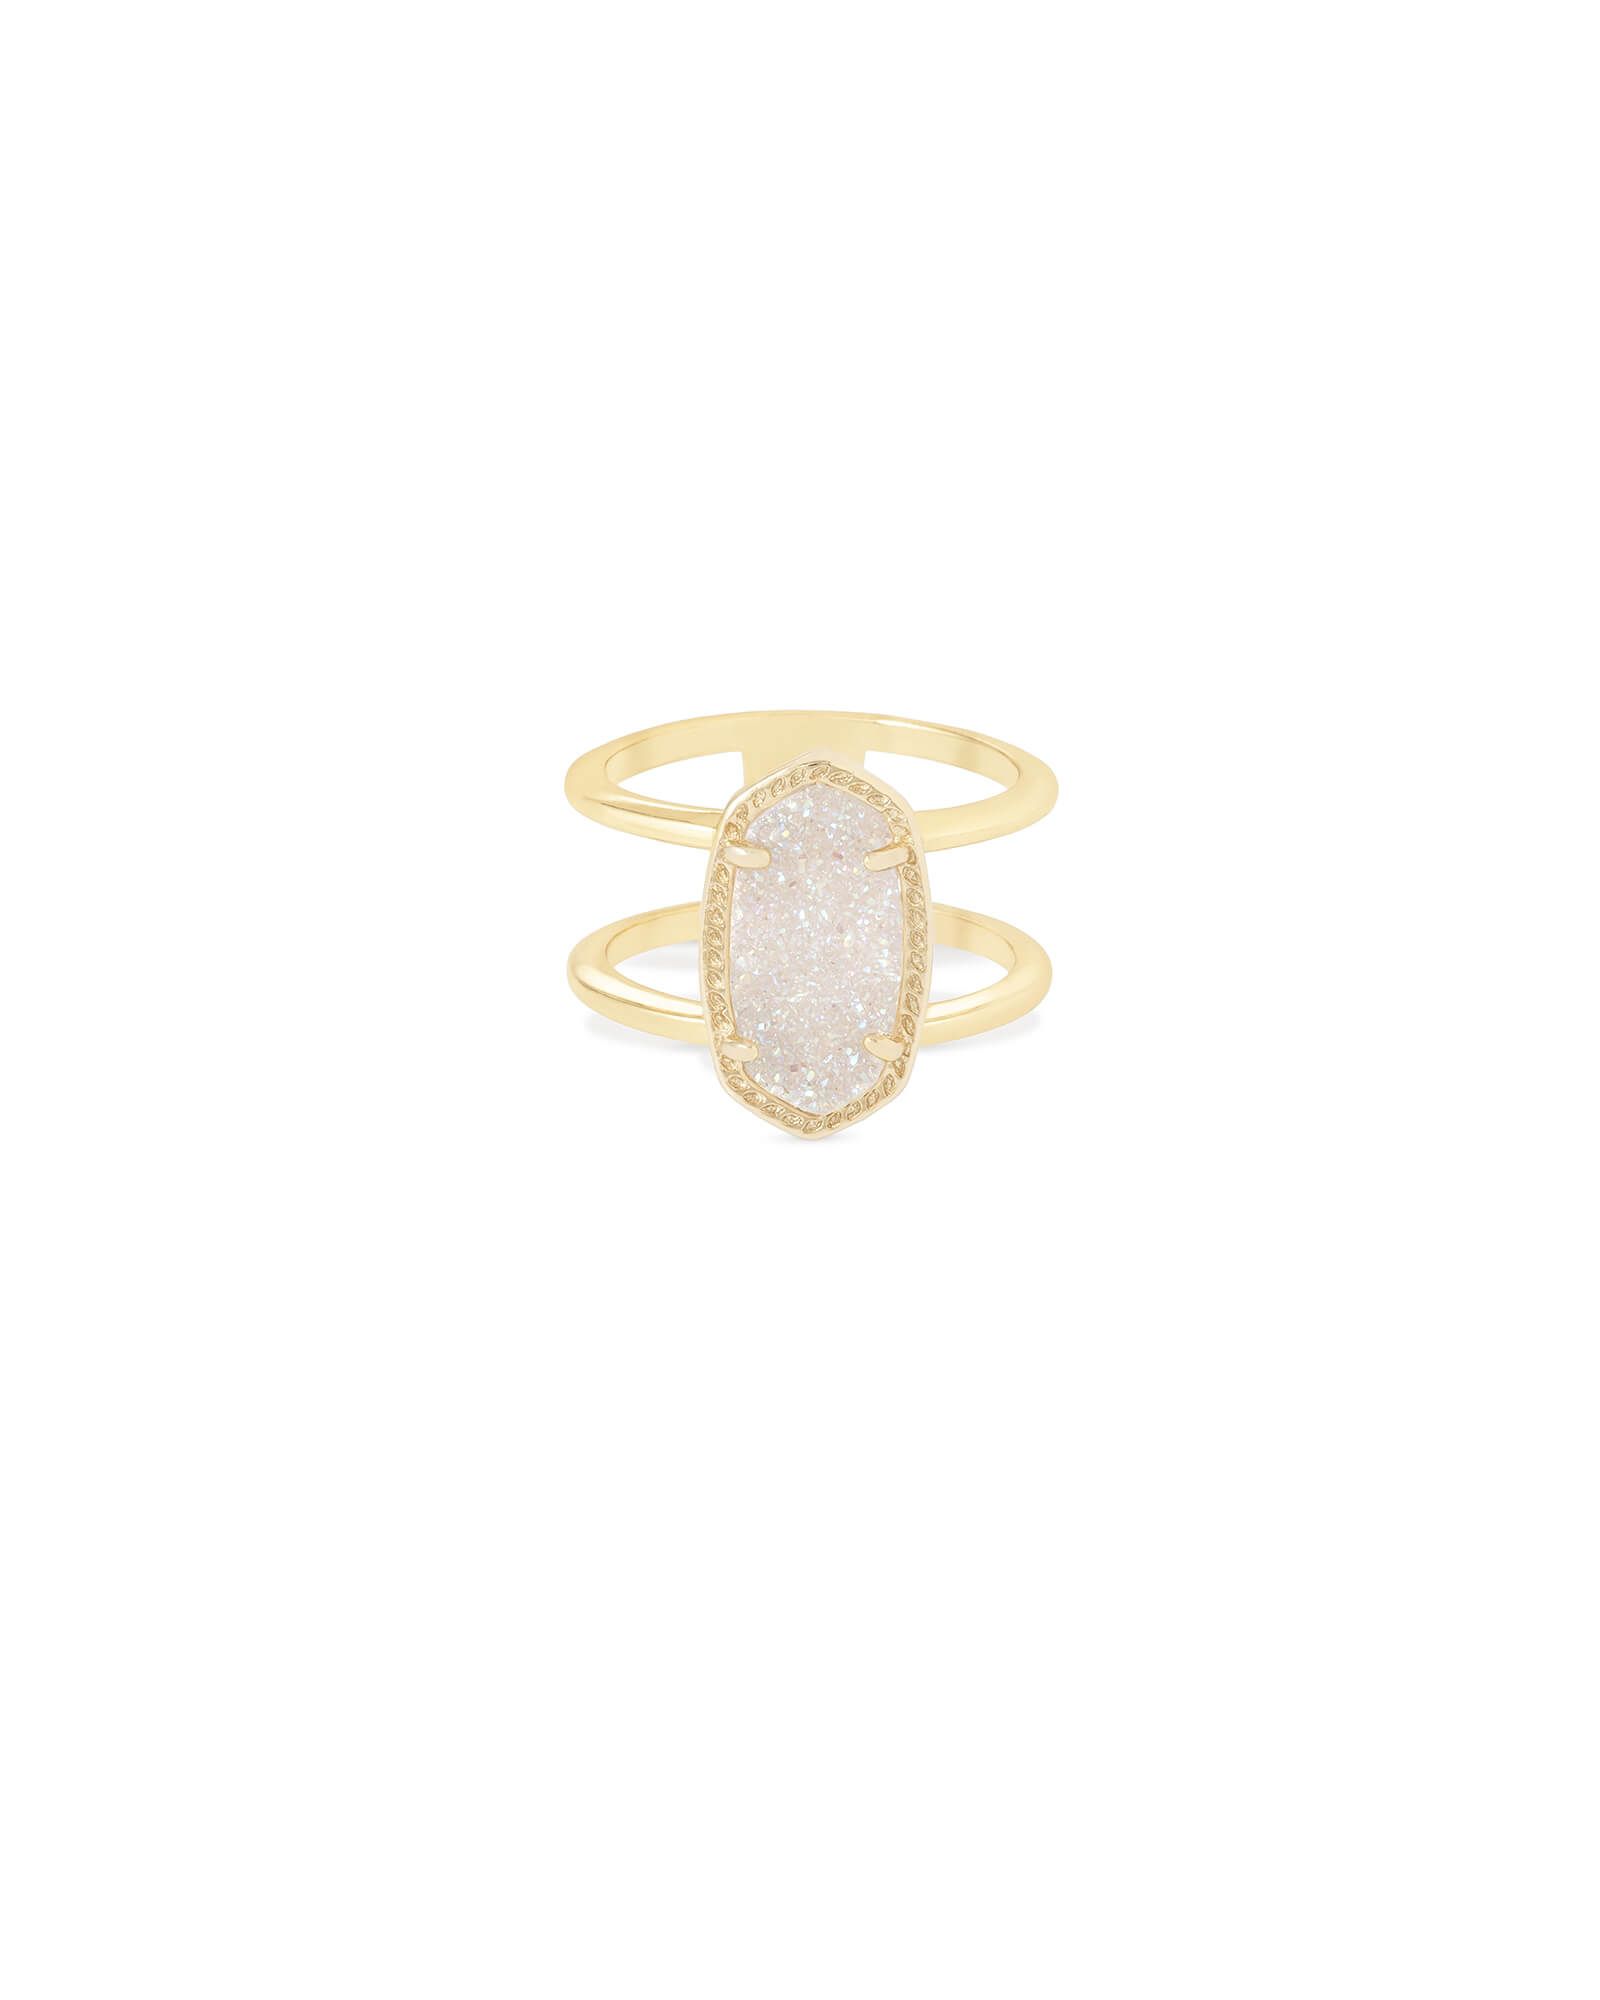 Elyse Gold Ring in Iridescent Drusy - 7 | Kendra Scott